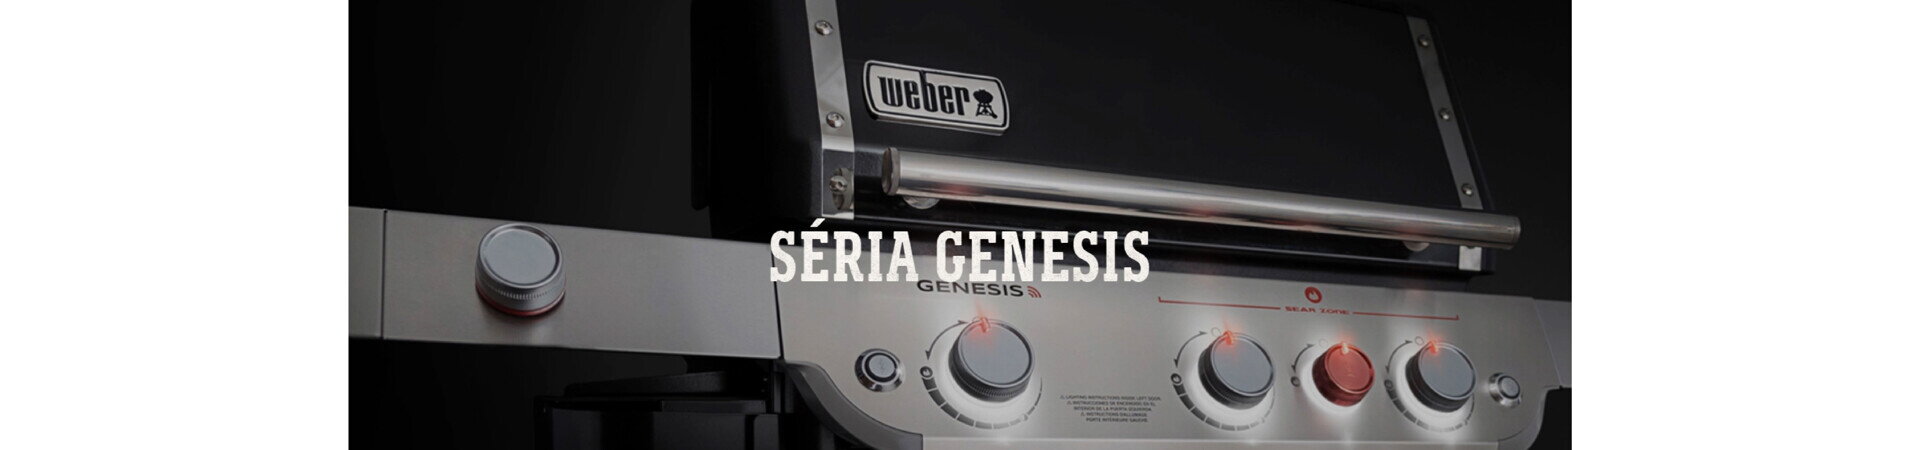 Weber Genesis II.